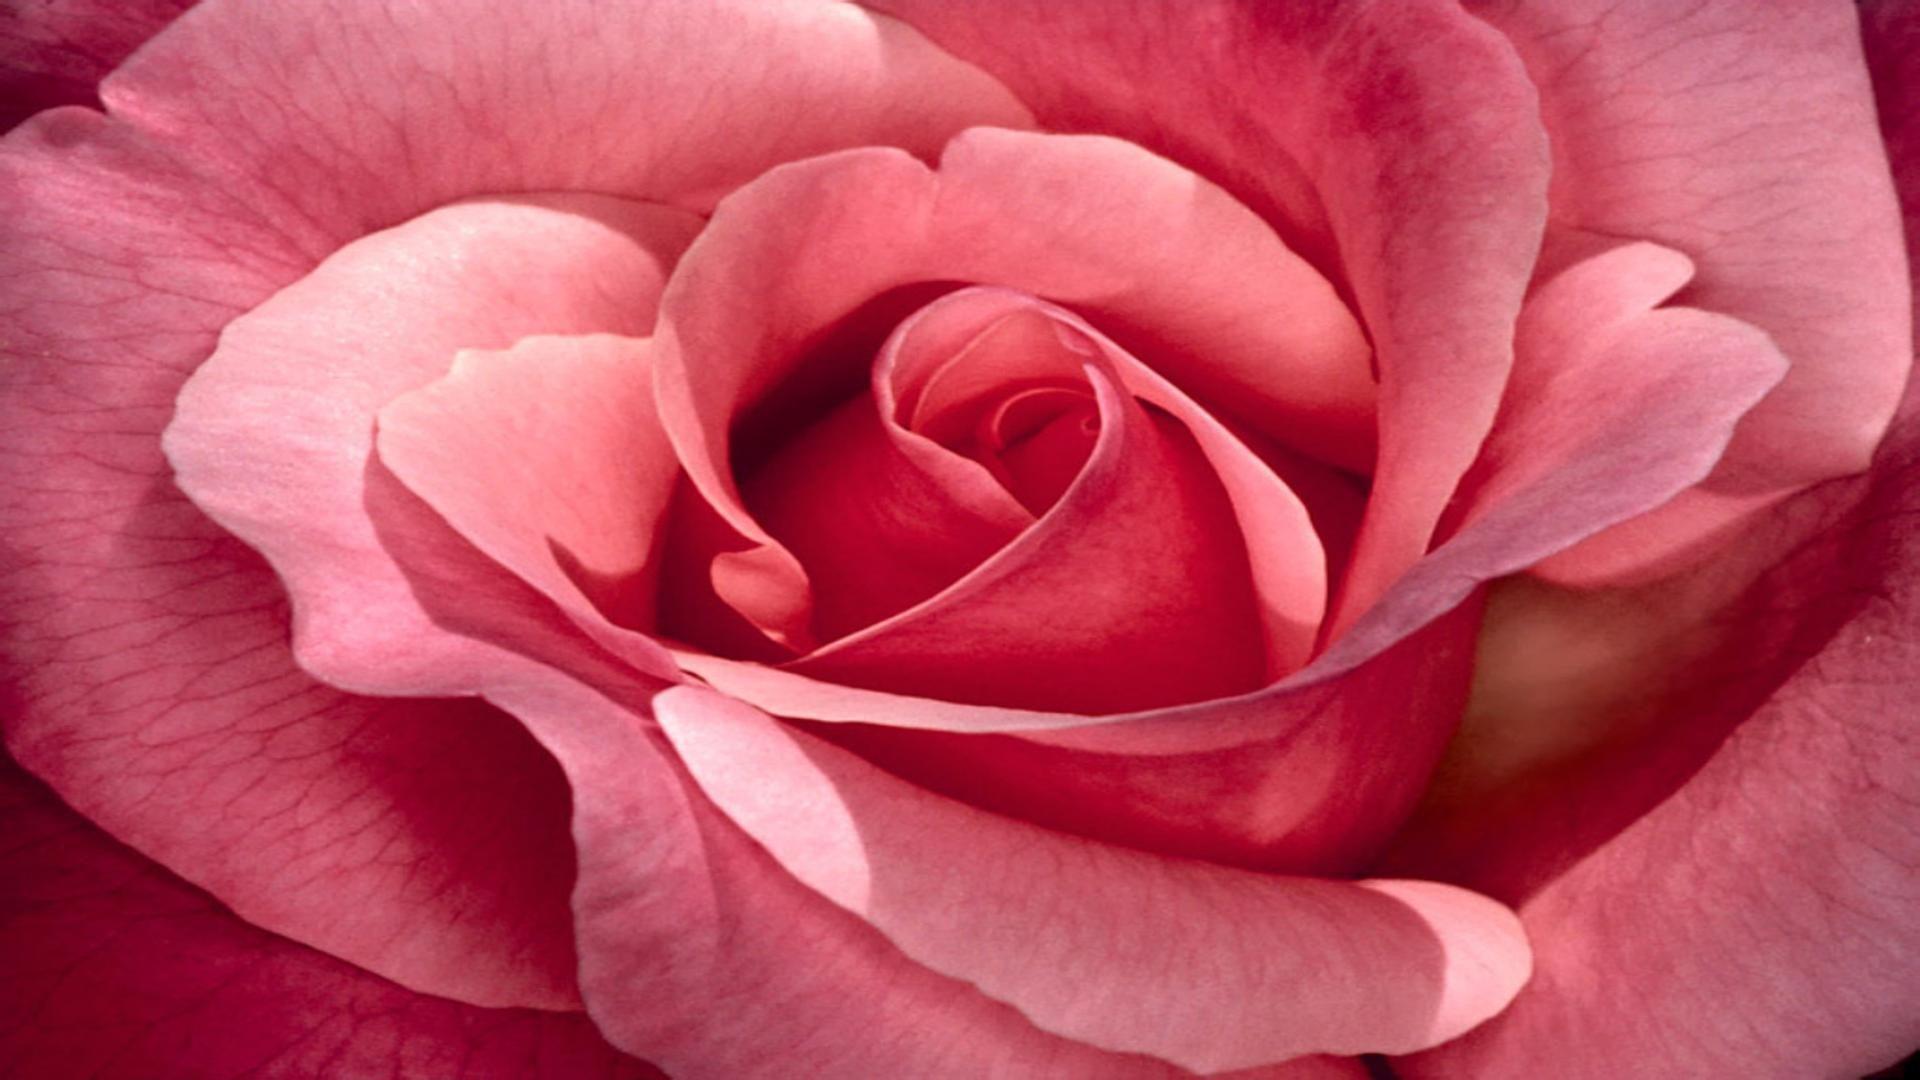 Pretty in pink roses free desktop background wallpaper image